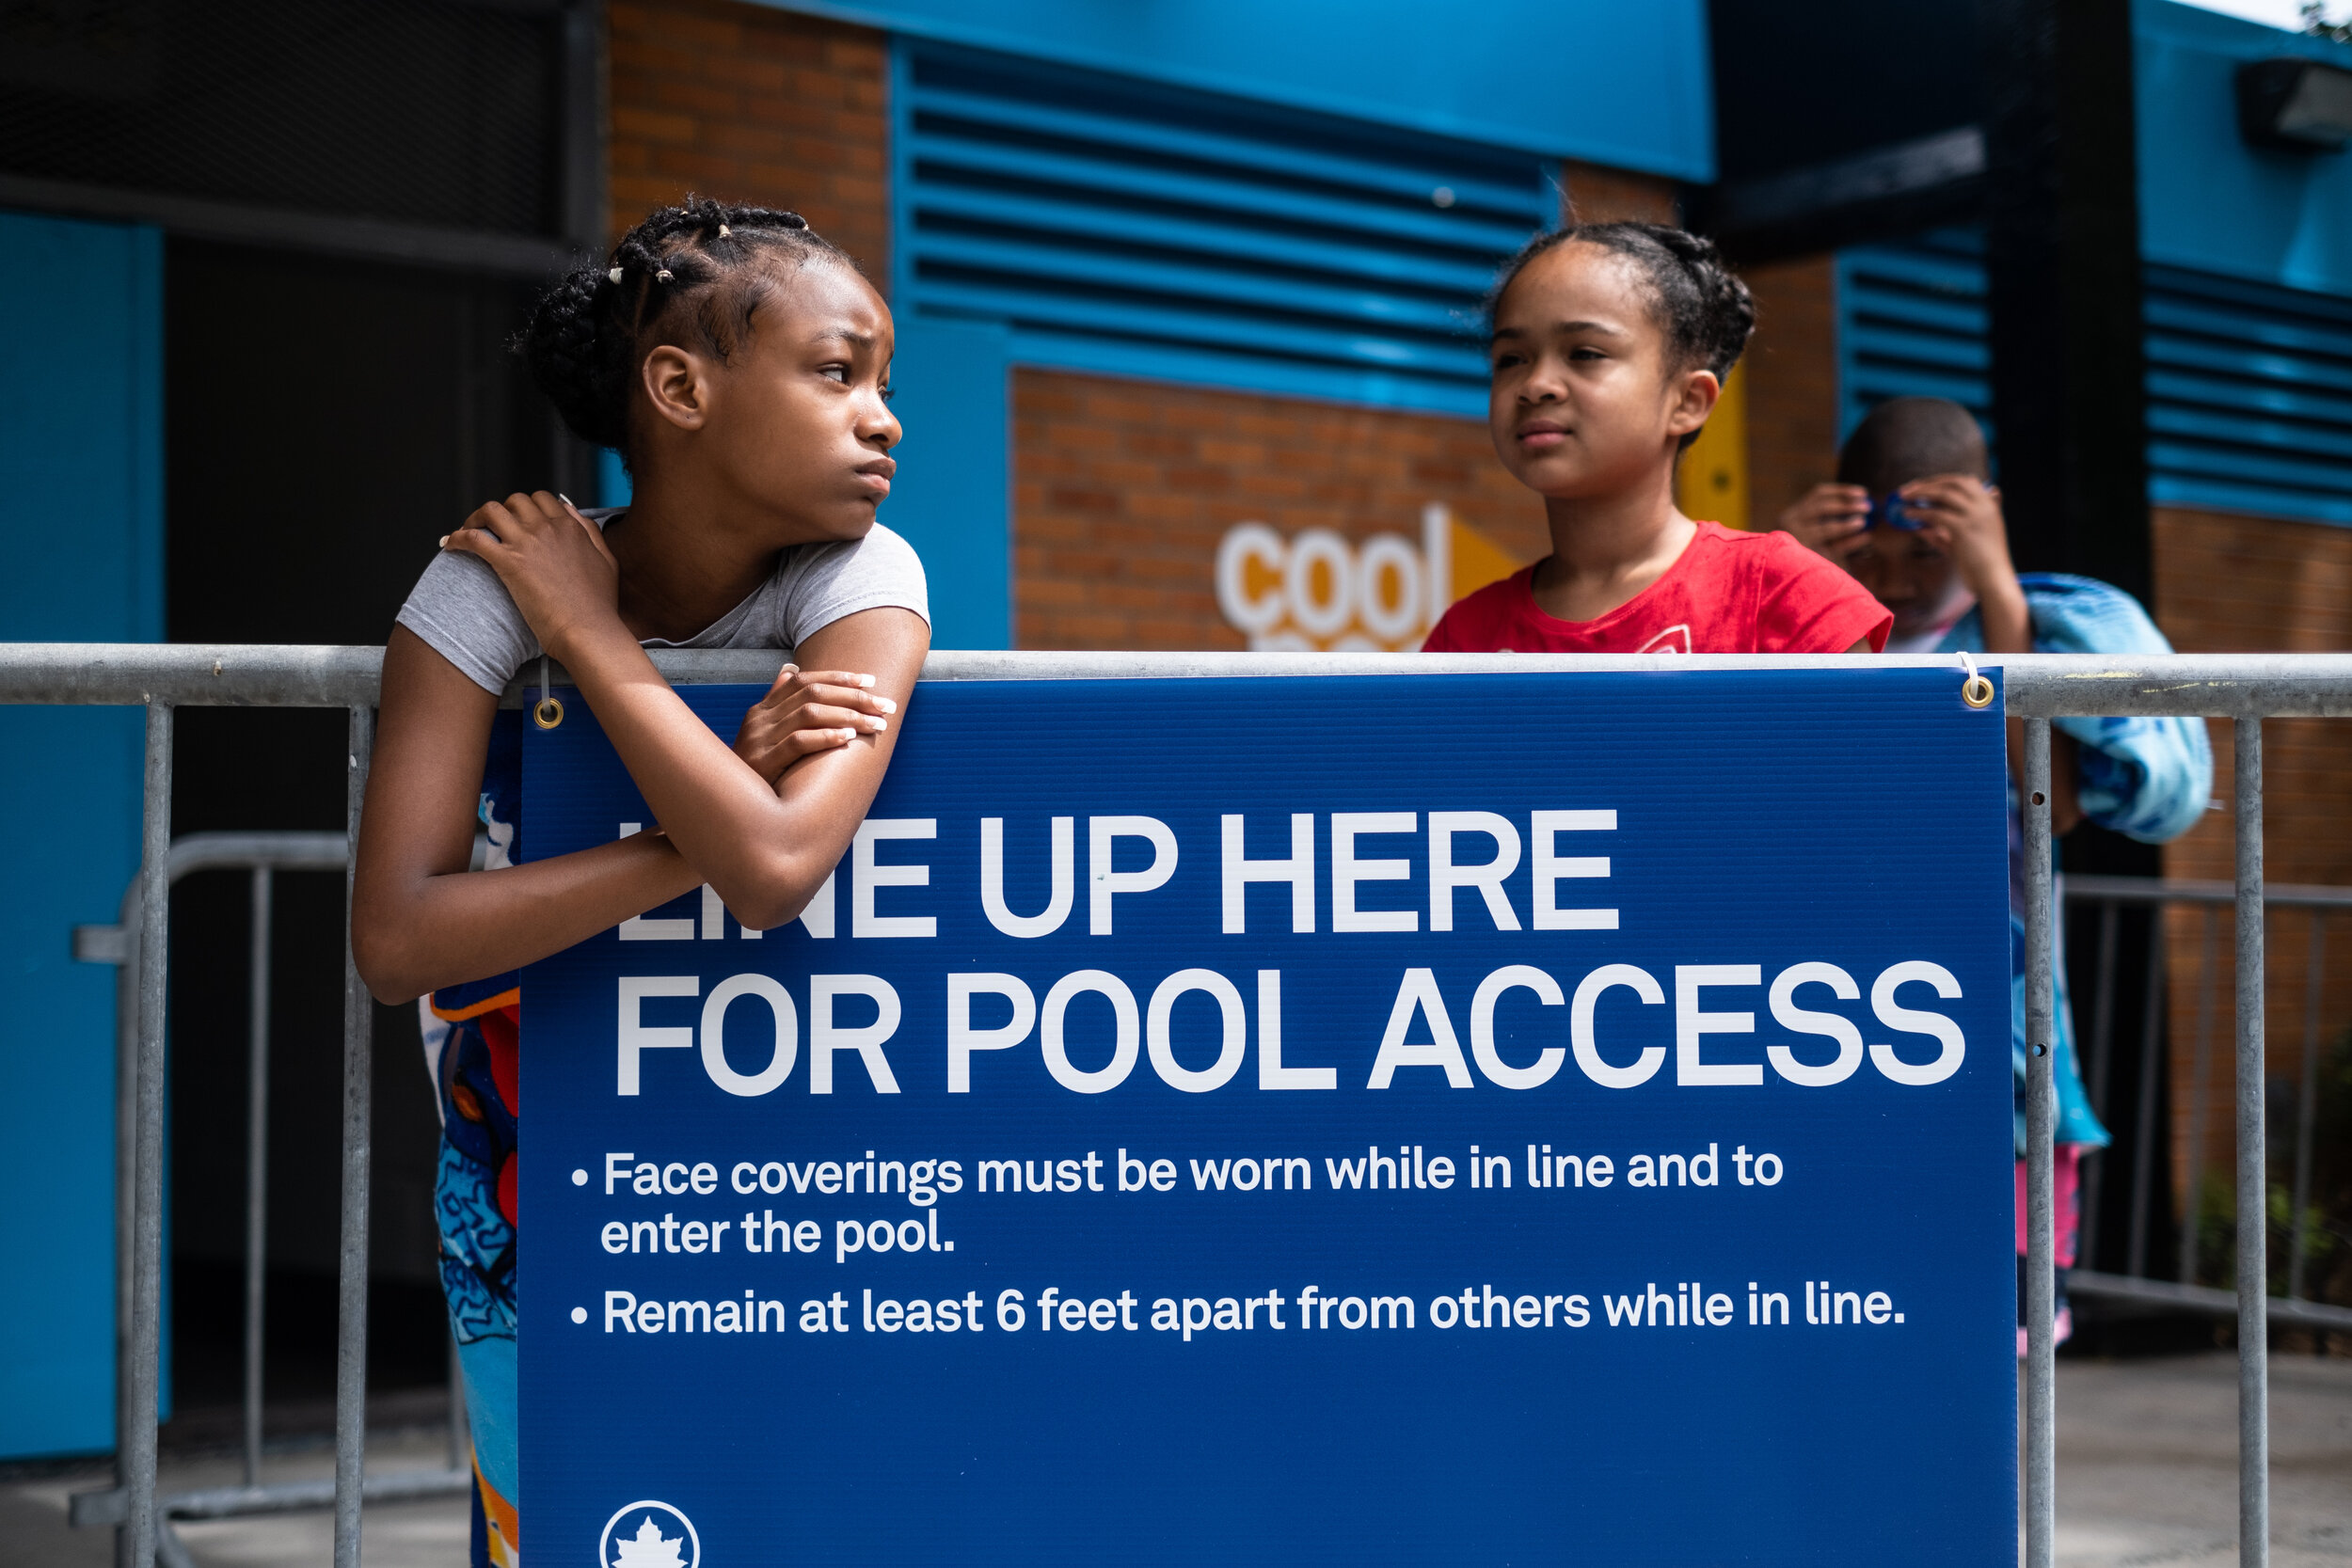  Opening day at Bushwick Pool, a newly renovated city run Cool Pool on Flushing Avenue in Bushwick, Brooklyn.  